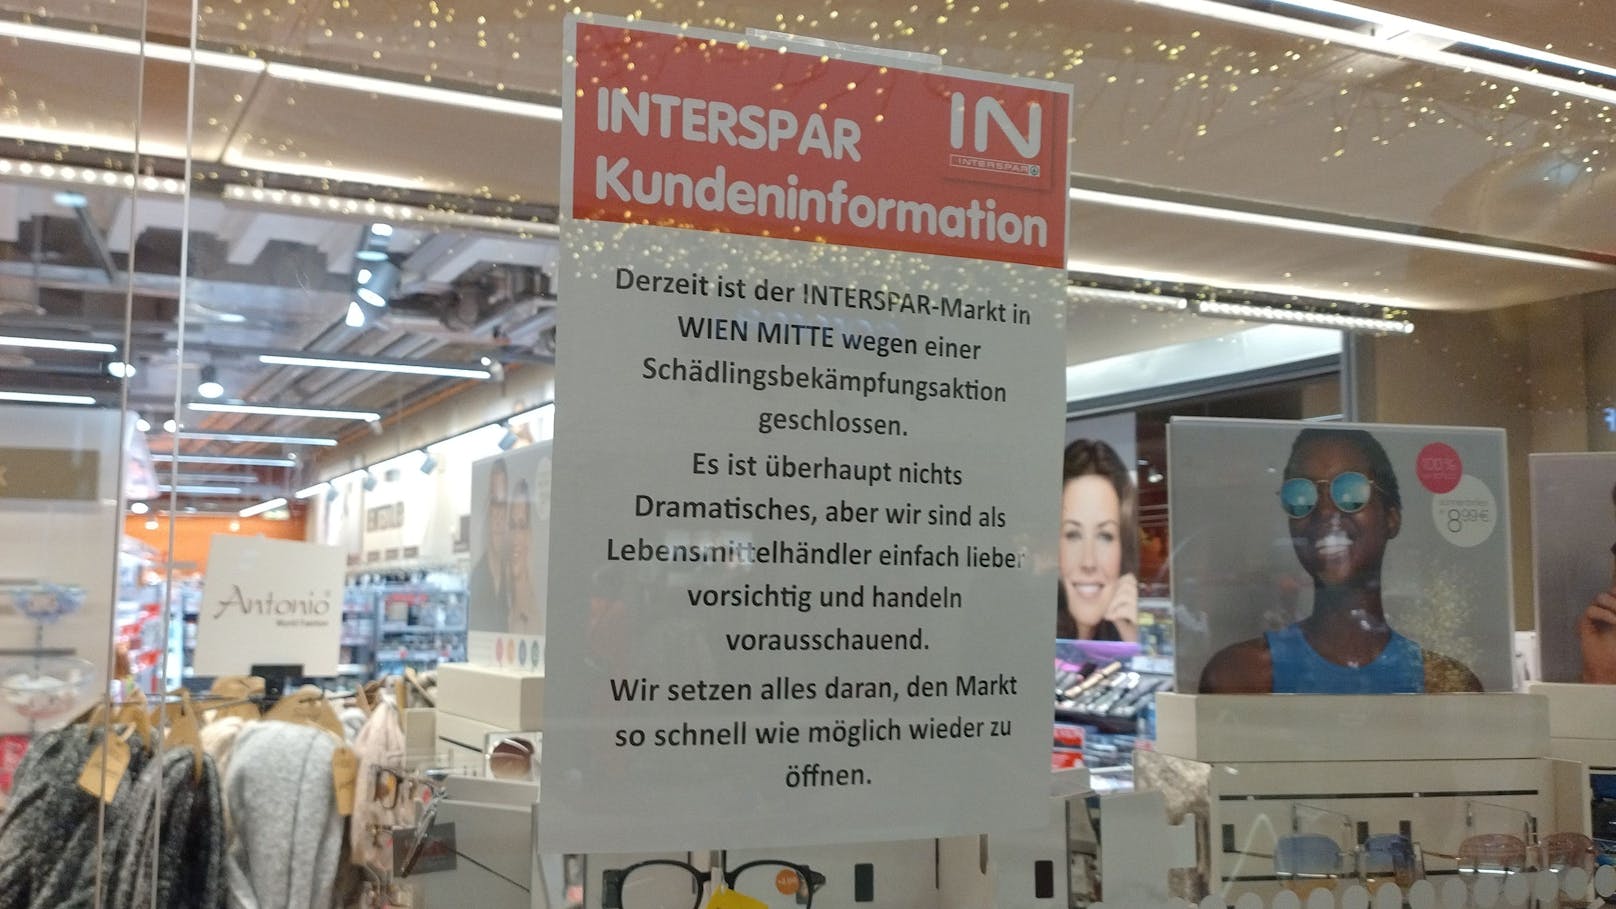 05.12.2023: <a rel="nofollow" data-li-document-ref="120007963" href="https://www.heute.at/s/wiener-supermarkt-muss-wegen-schaedlingen-zusperren-120007963">Wiener Supermarkt muss wegen Schädlingen zusperren</a>